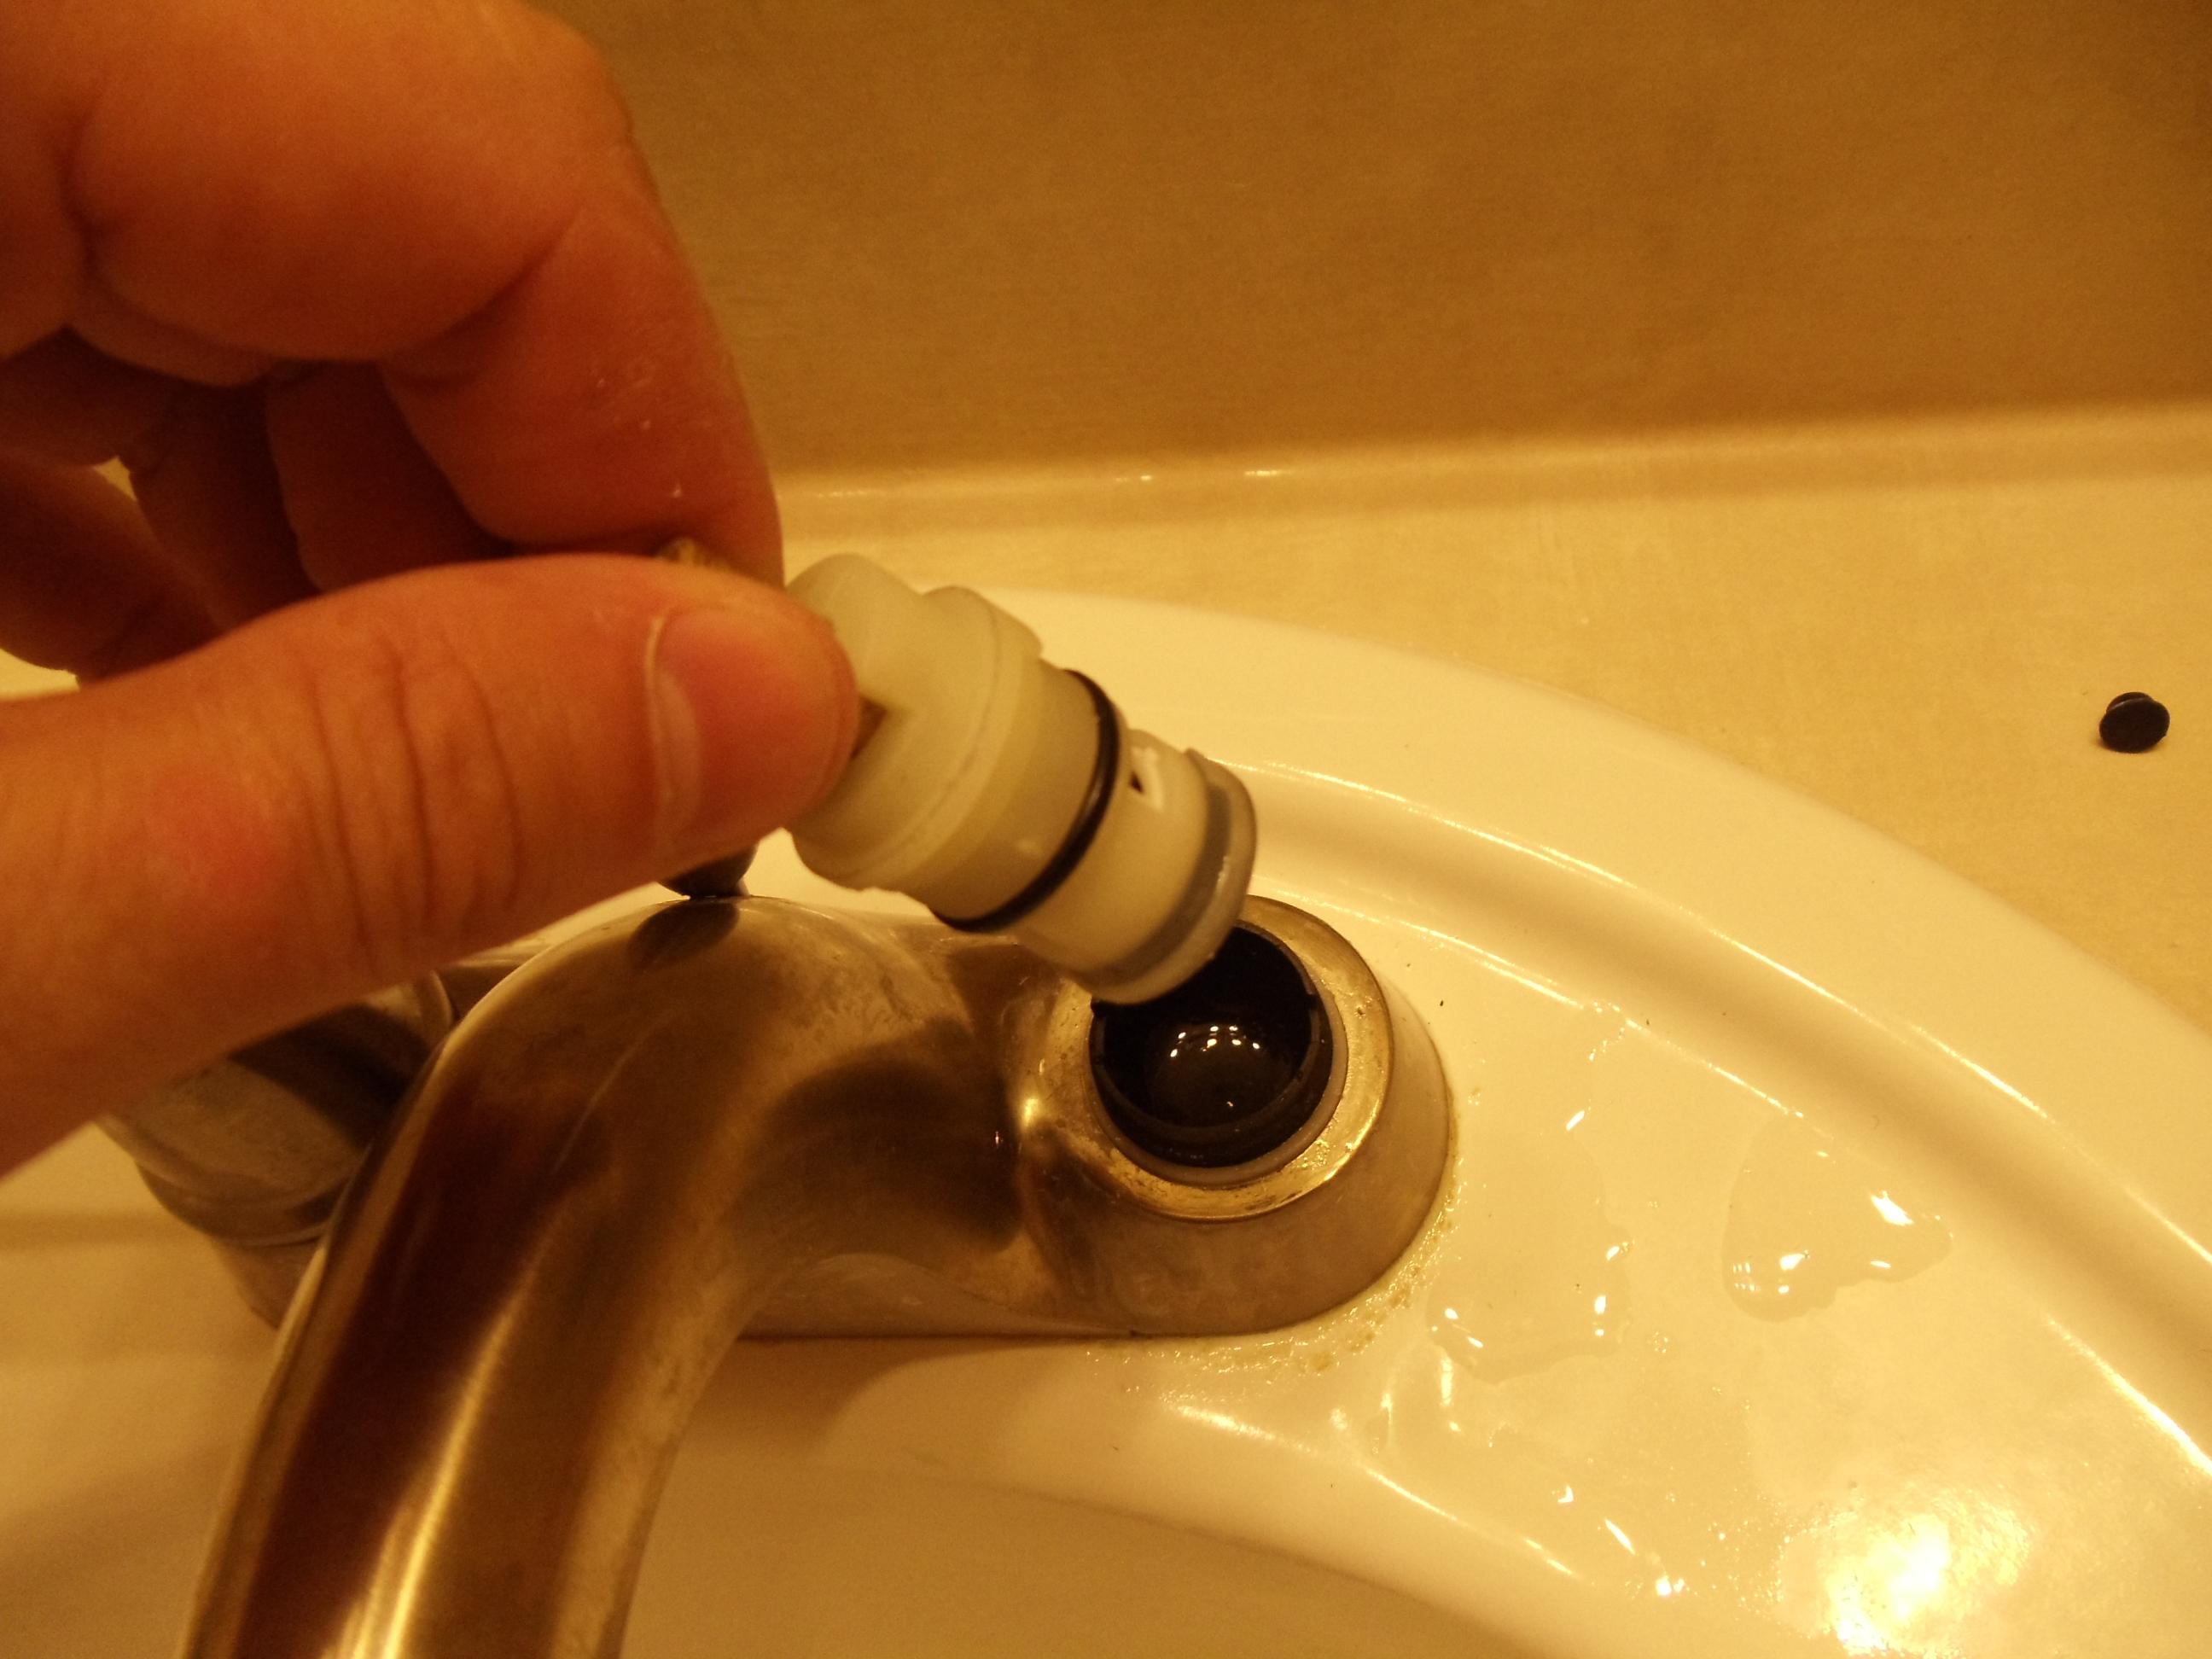 glacier bay bathroom sink faucet cartridge replacement